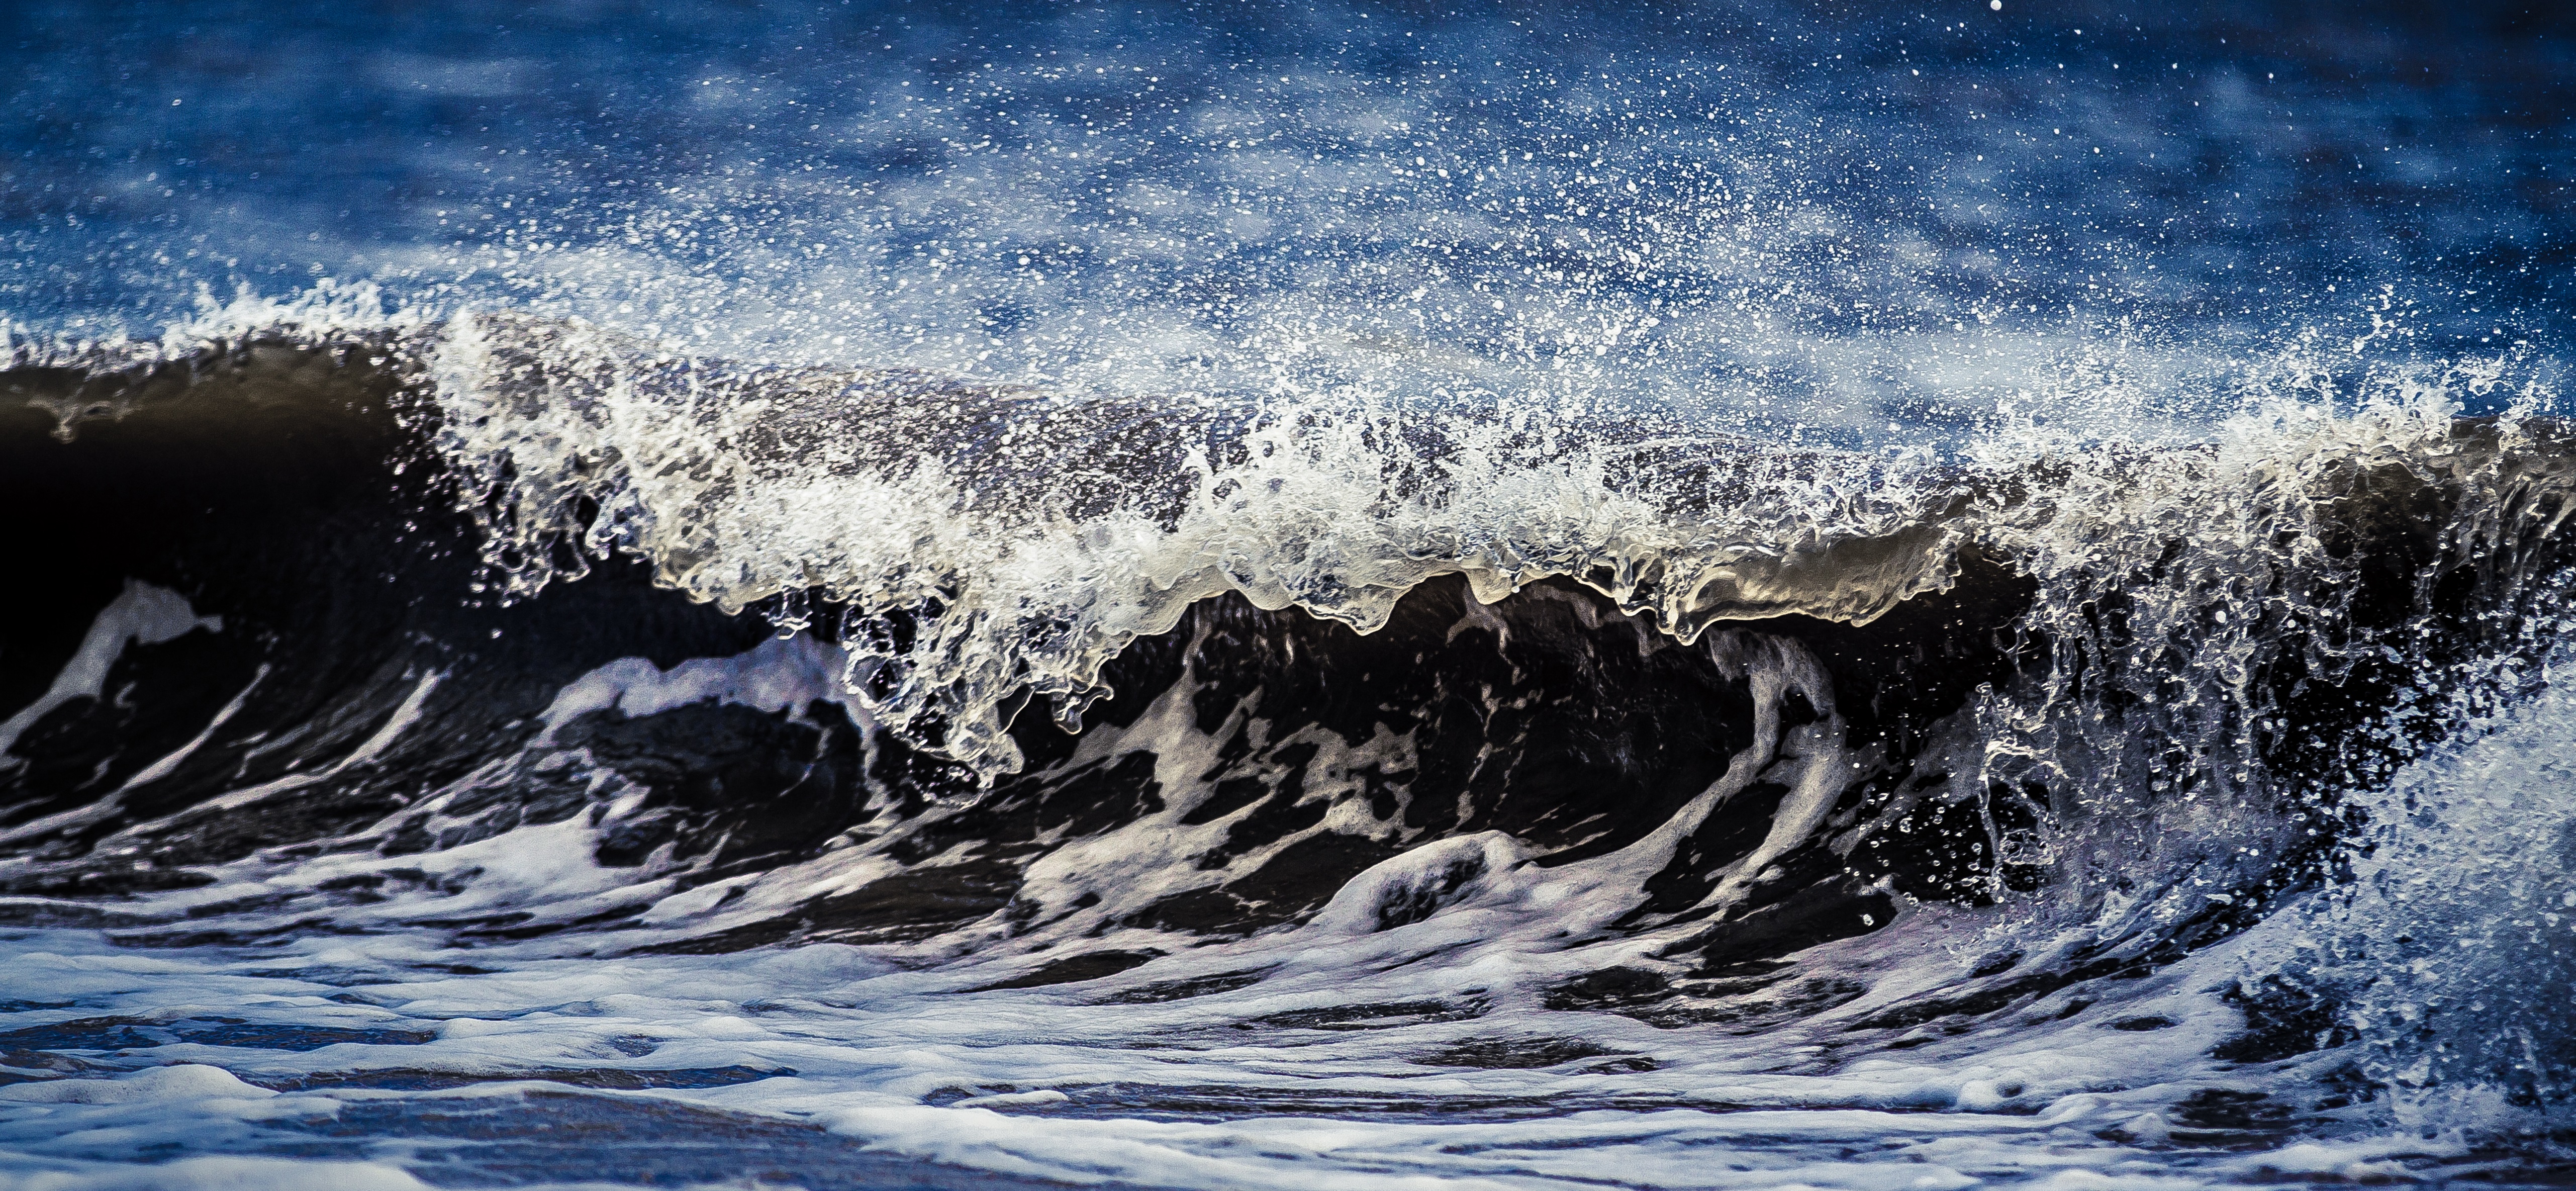 photo of ocean wave by lee attwood